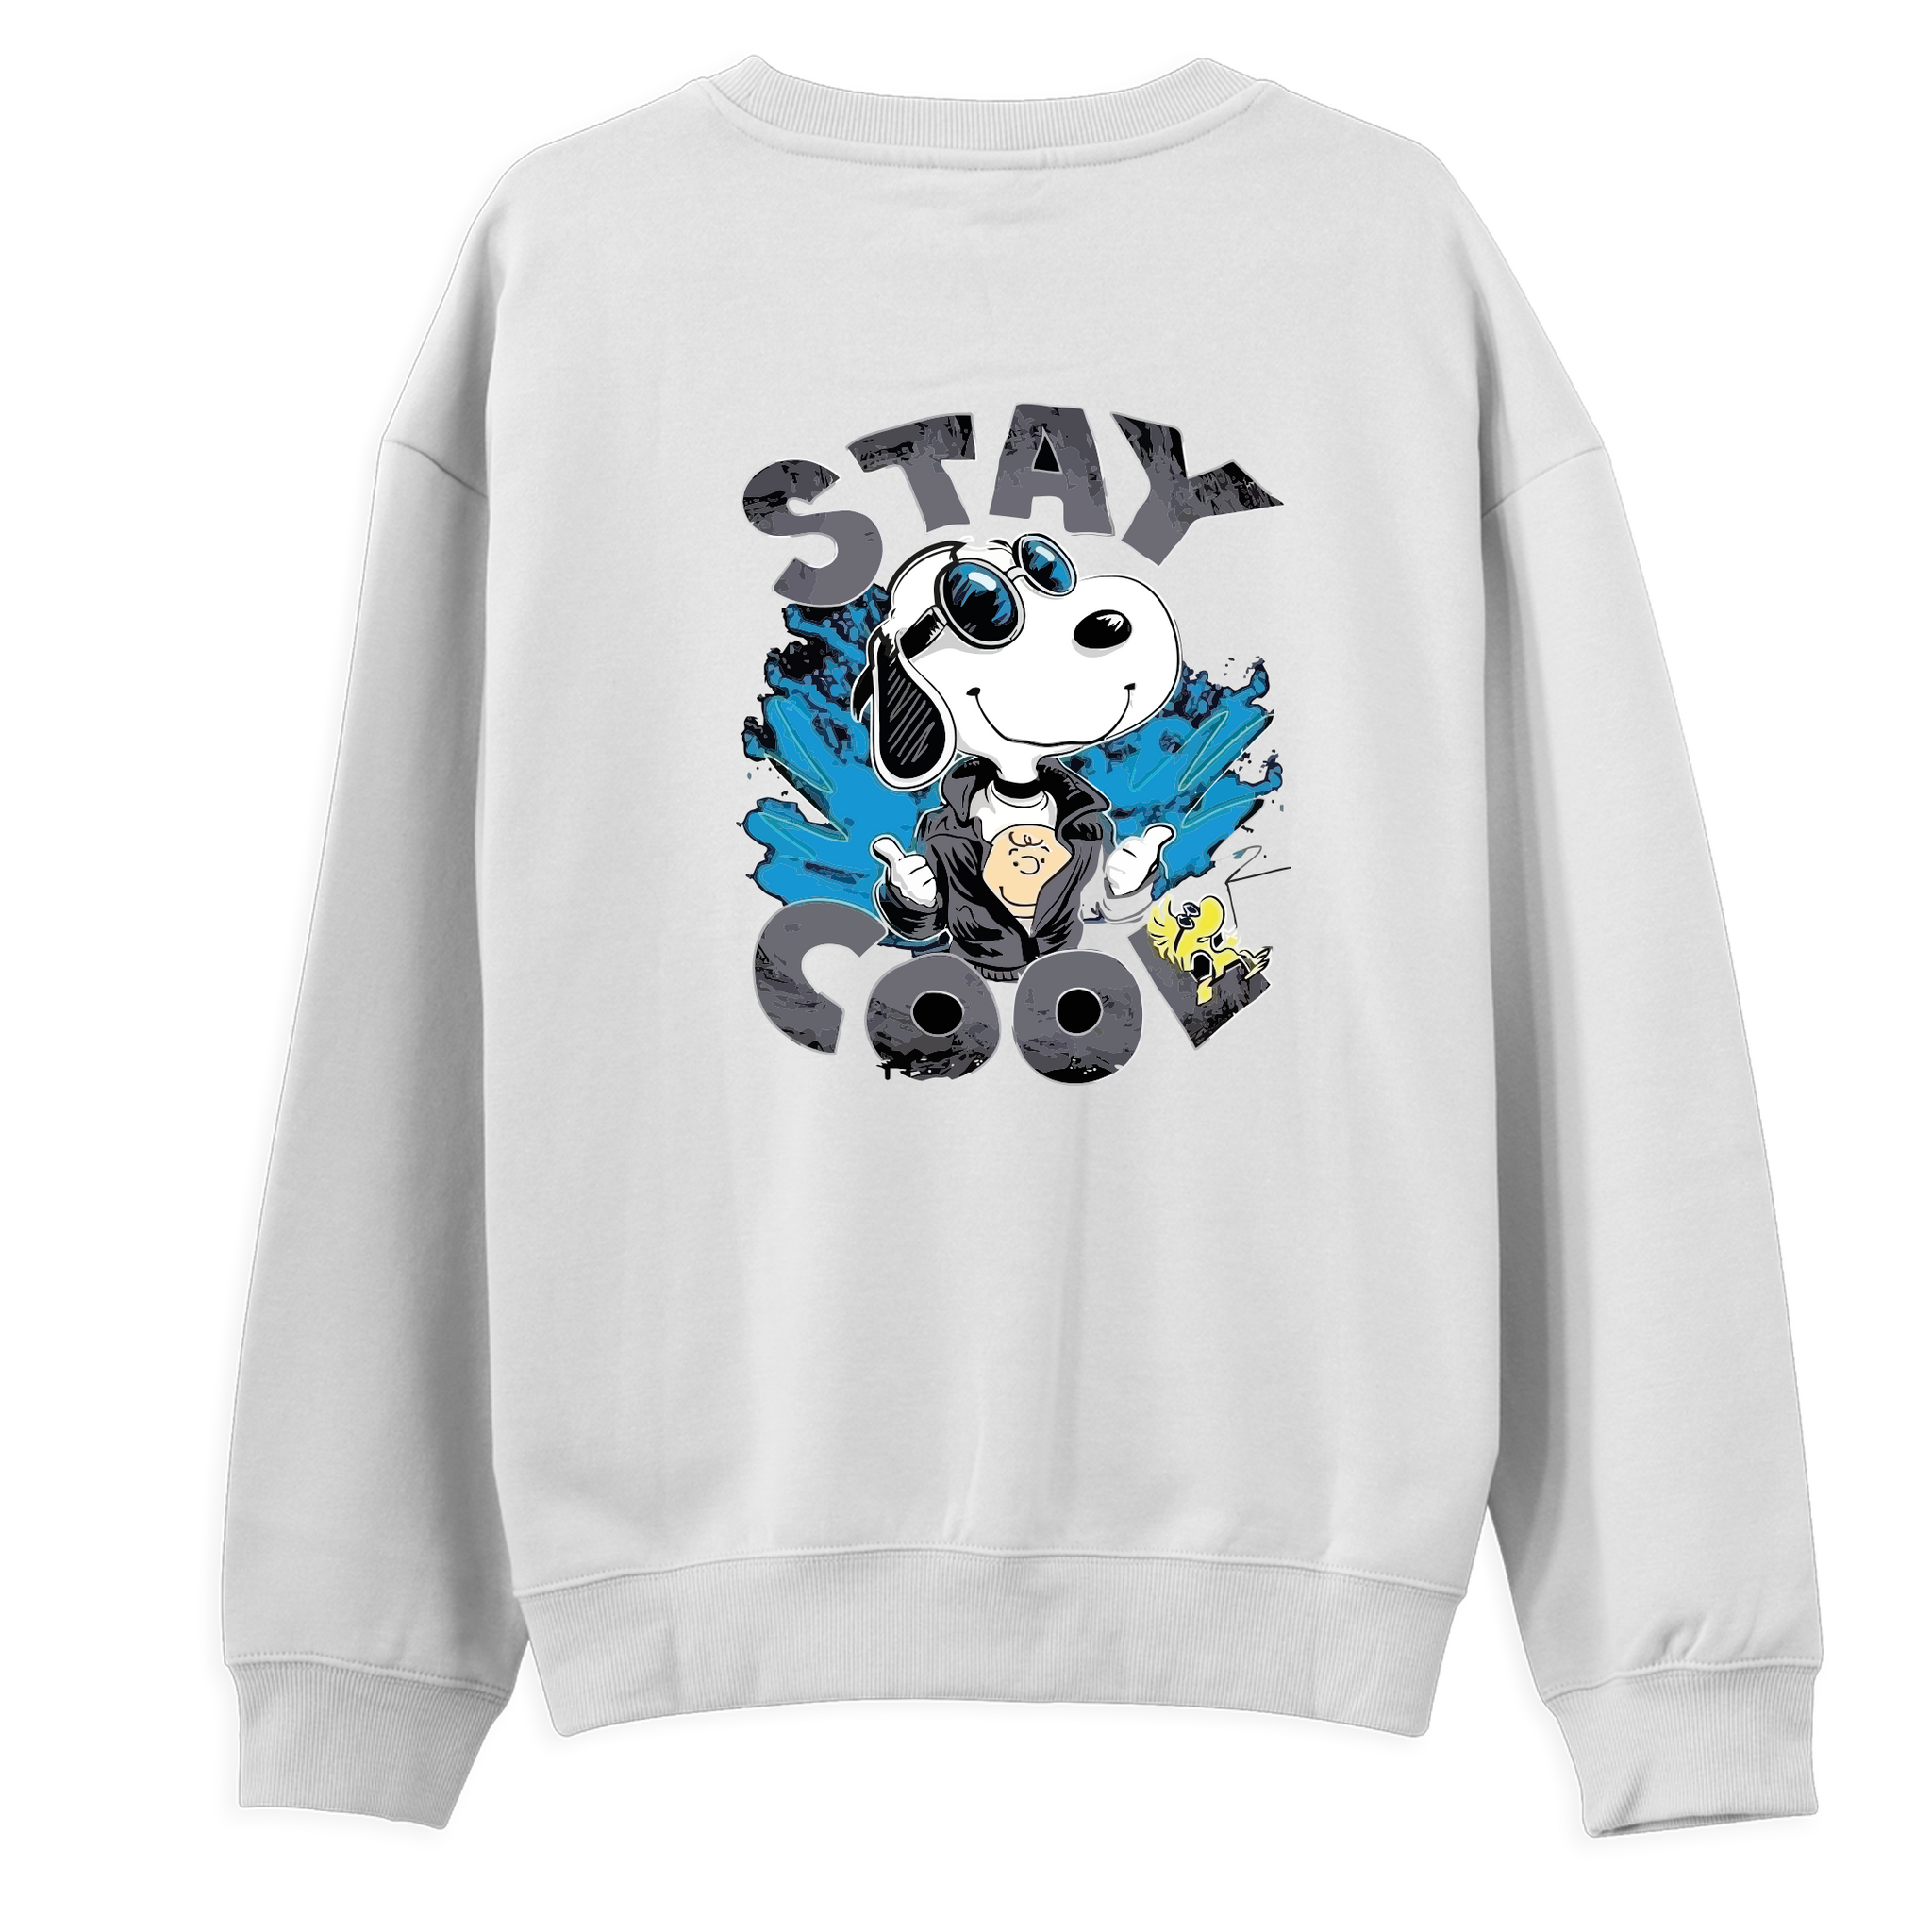 Stay Cool - Sweatshirt -Regular